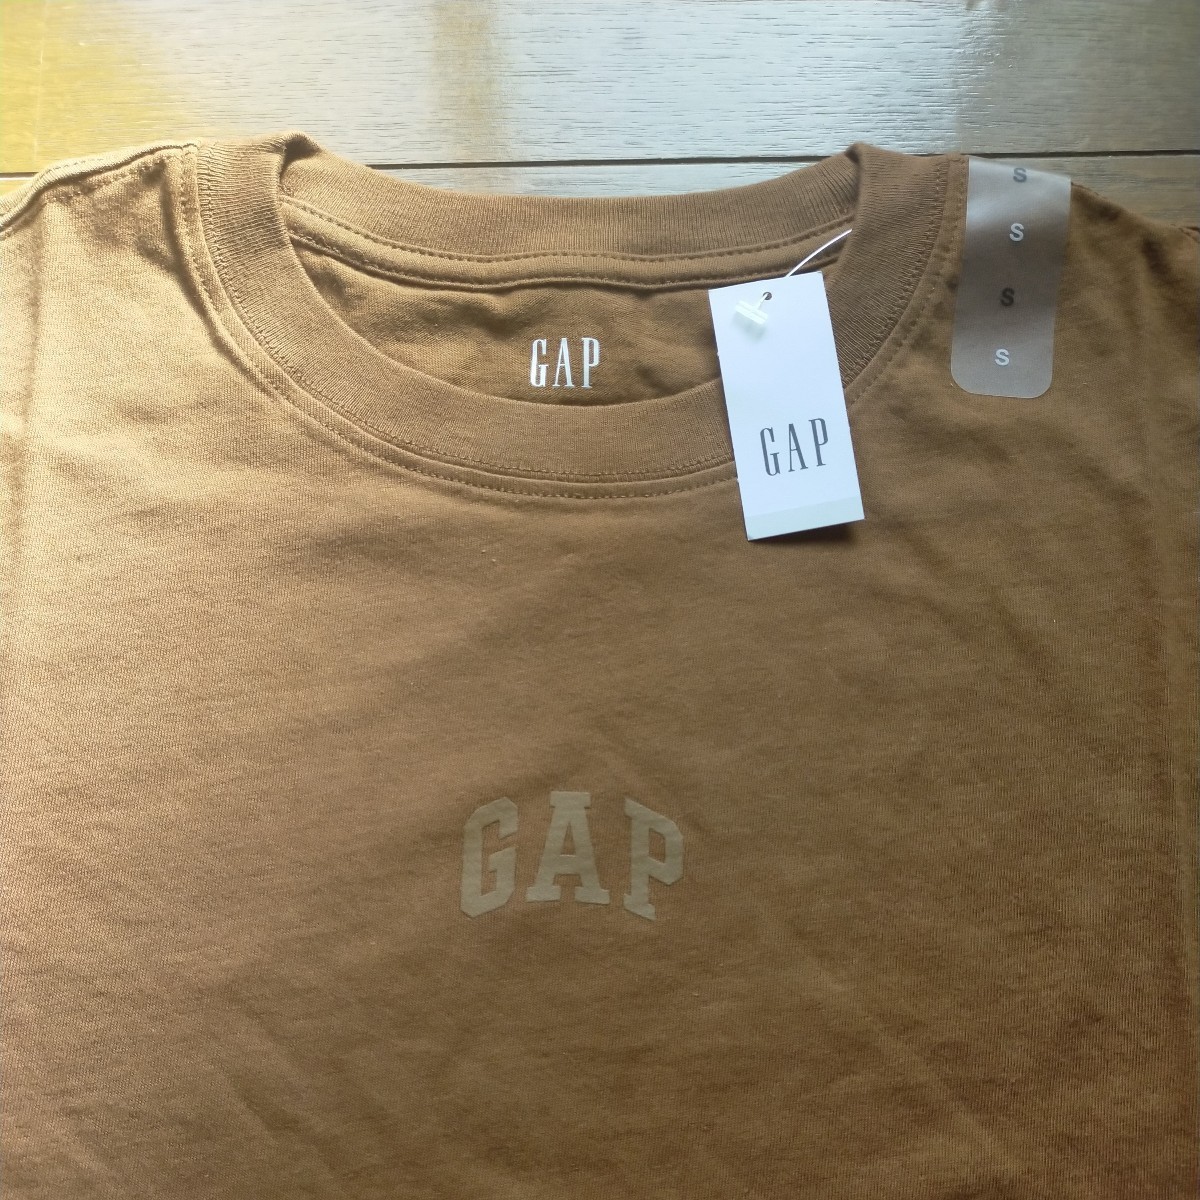 GAP ギャップ ロゴ 長袖Tシャツ ブラウン Sサイズ 定価3490円 長袖 ロンT Tシャツ 茶色 y9738-1-HZ8_画像2